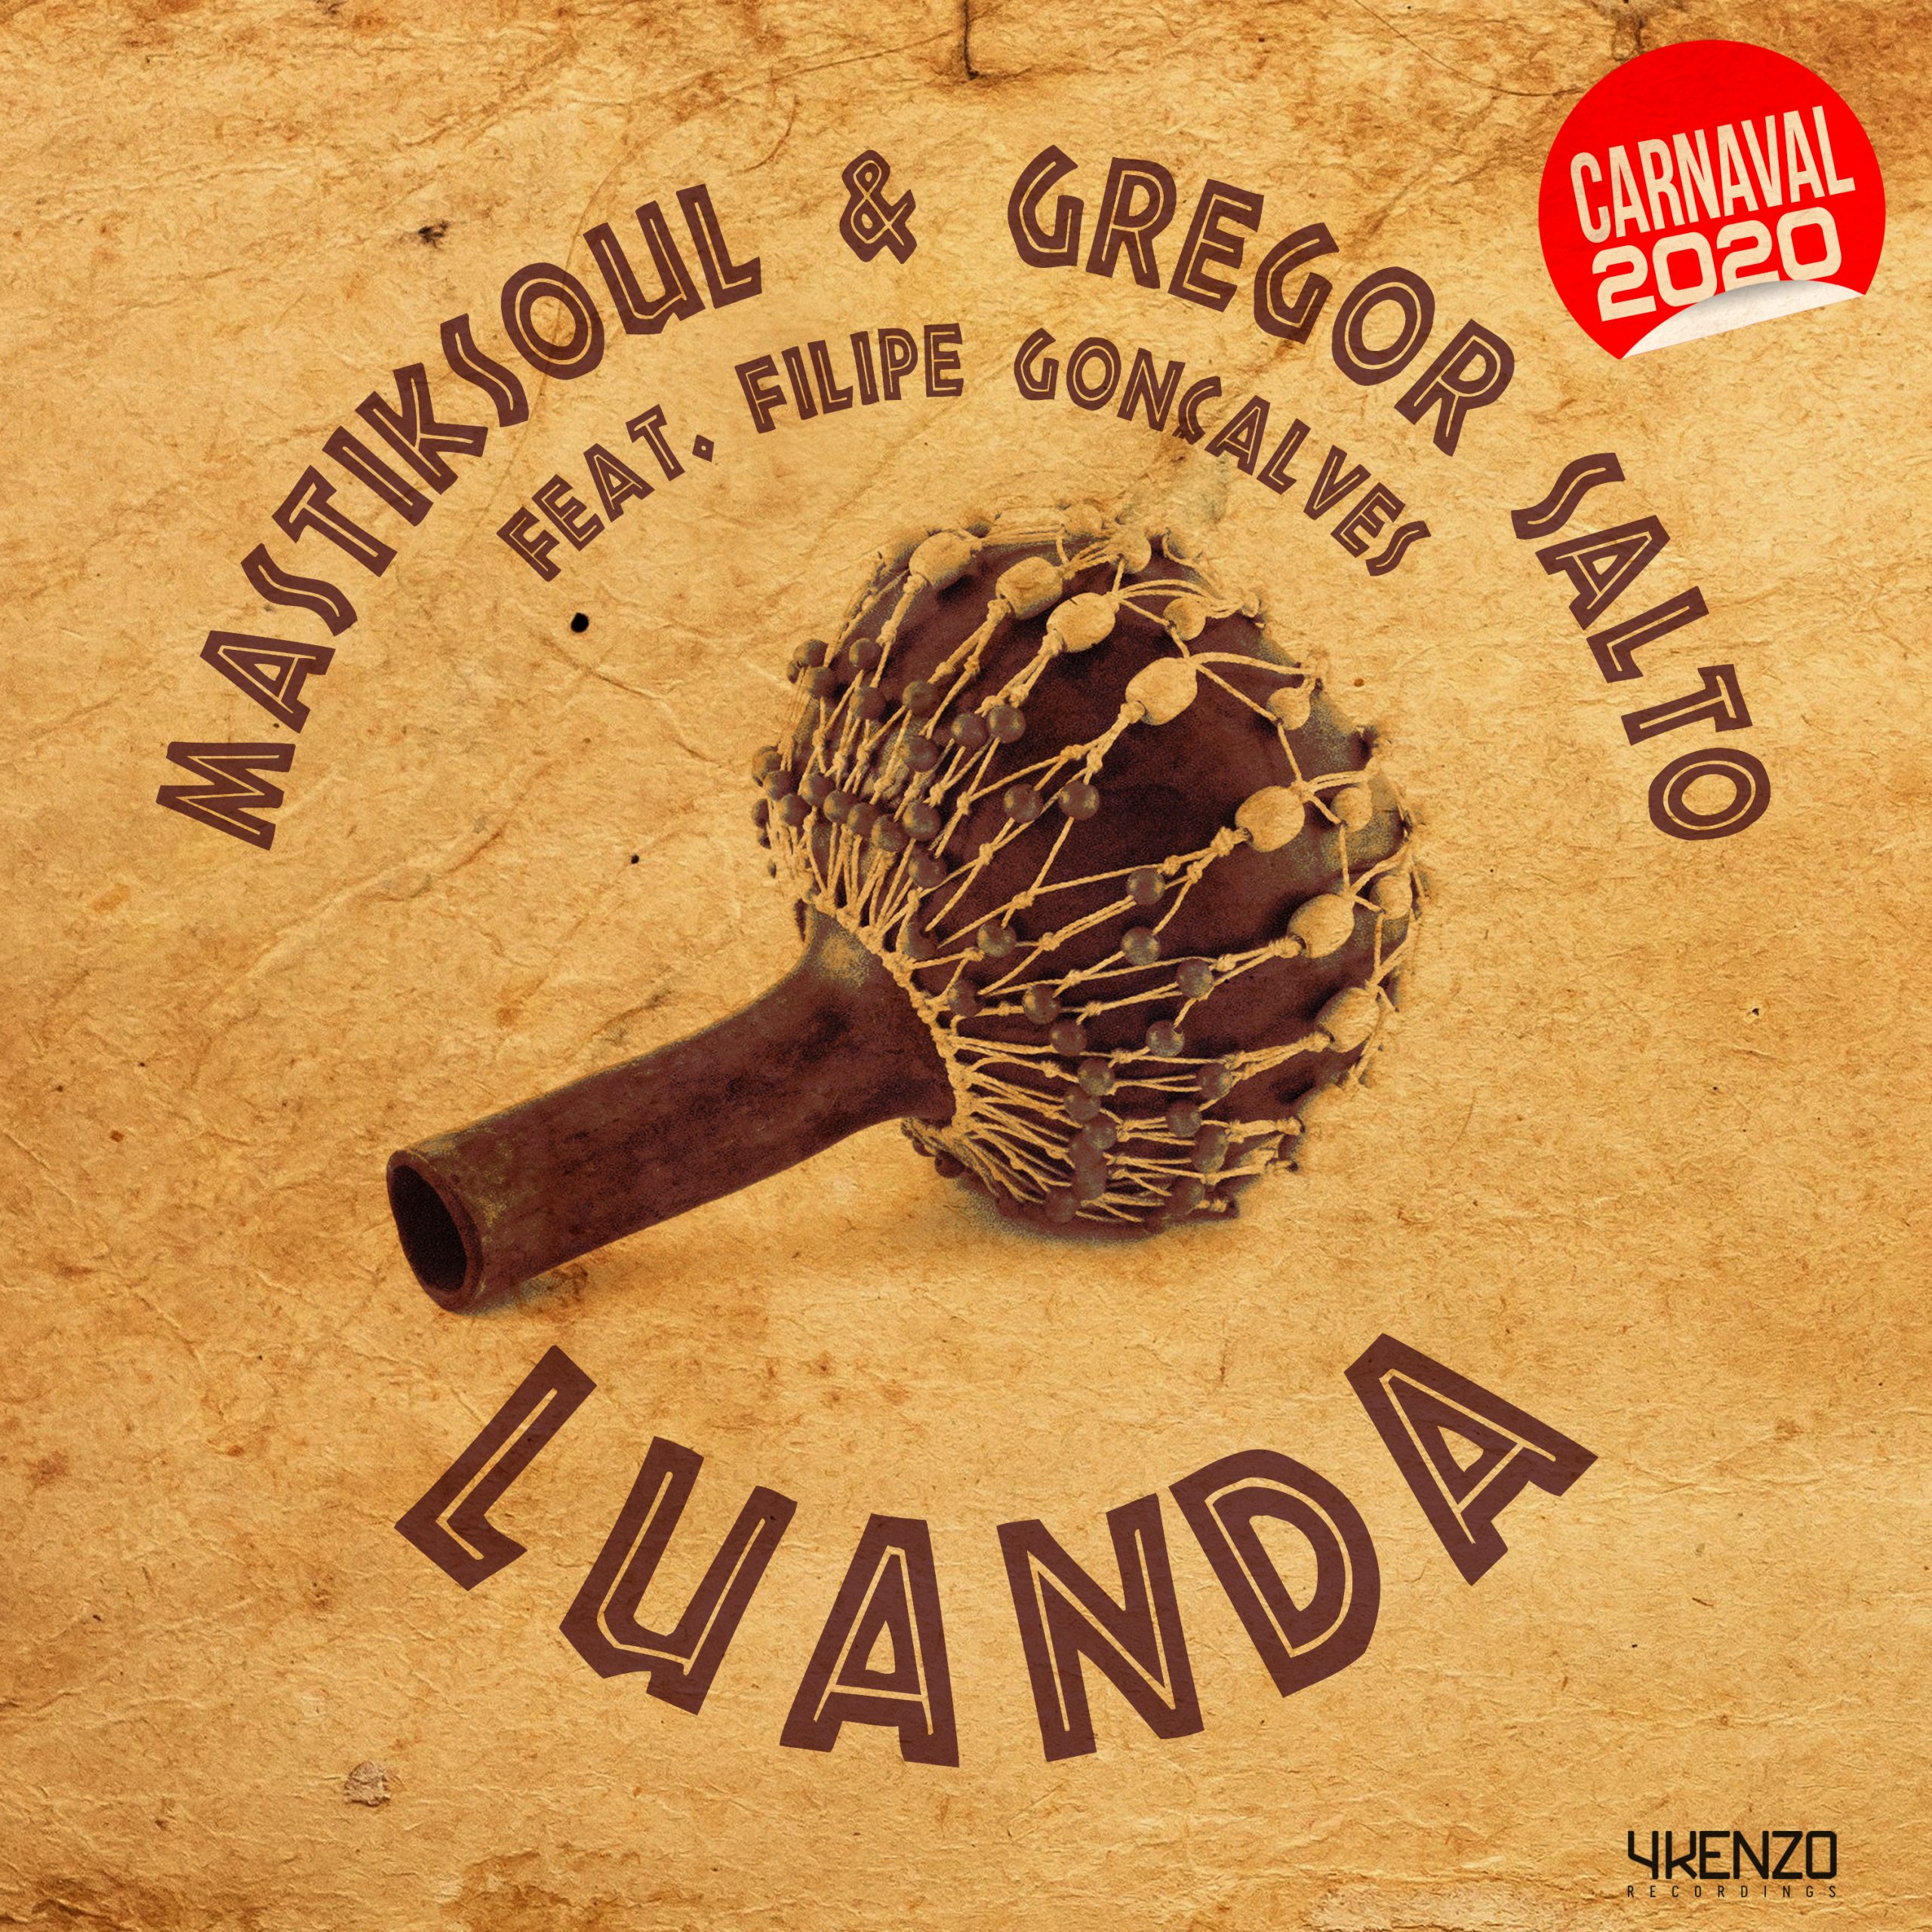 Mastiksoul & Gregor Salto ft Filipe Gonçalves - Luanda